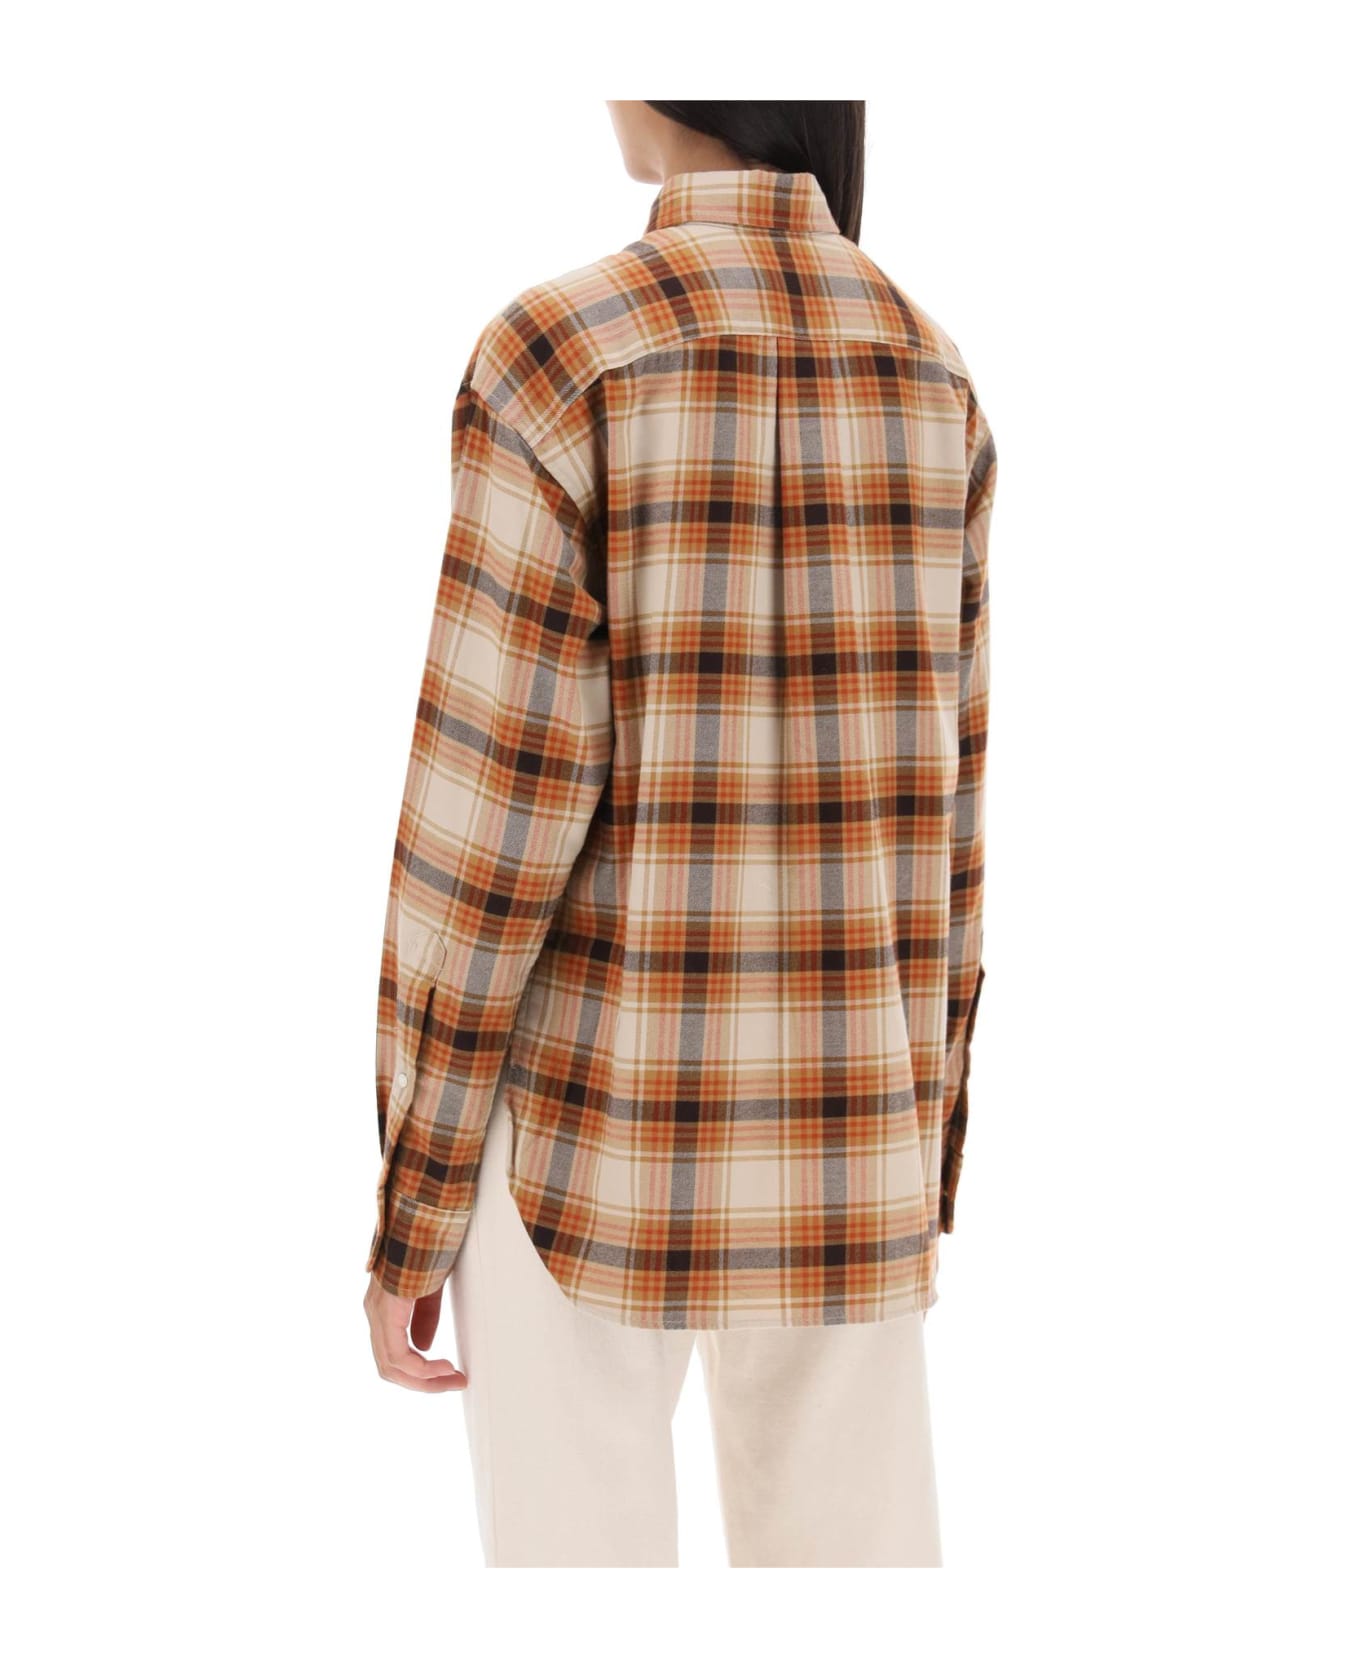 Polo Ralph Lauren Check Flannel Shirt - TAN MULTI PLAID (Beige) シャツ